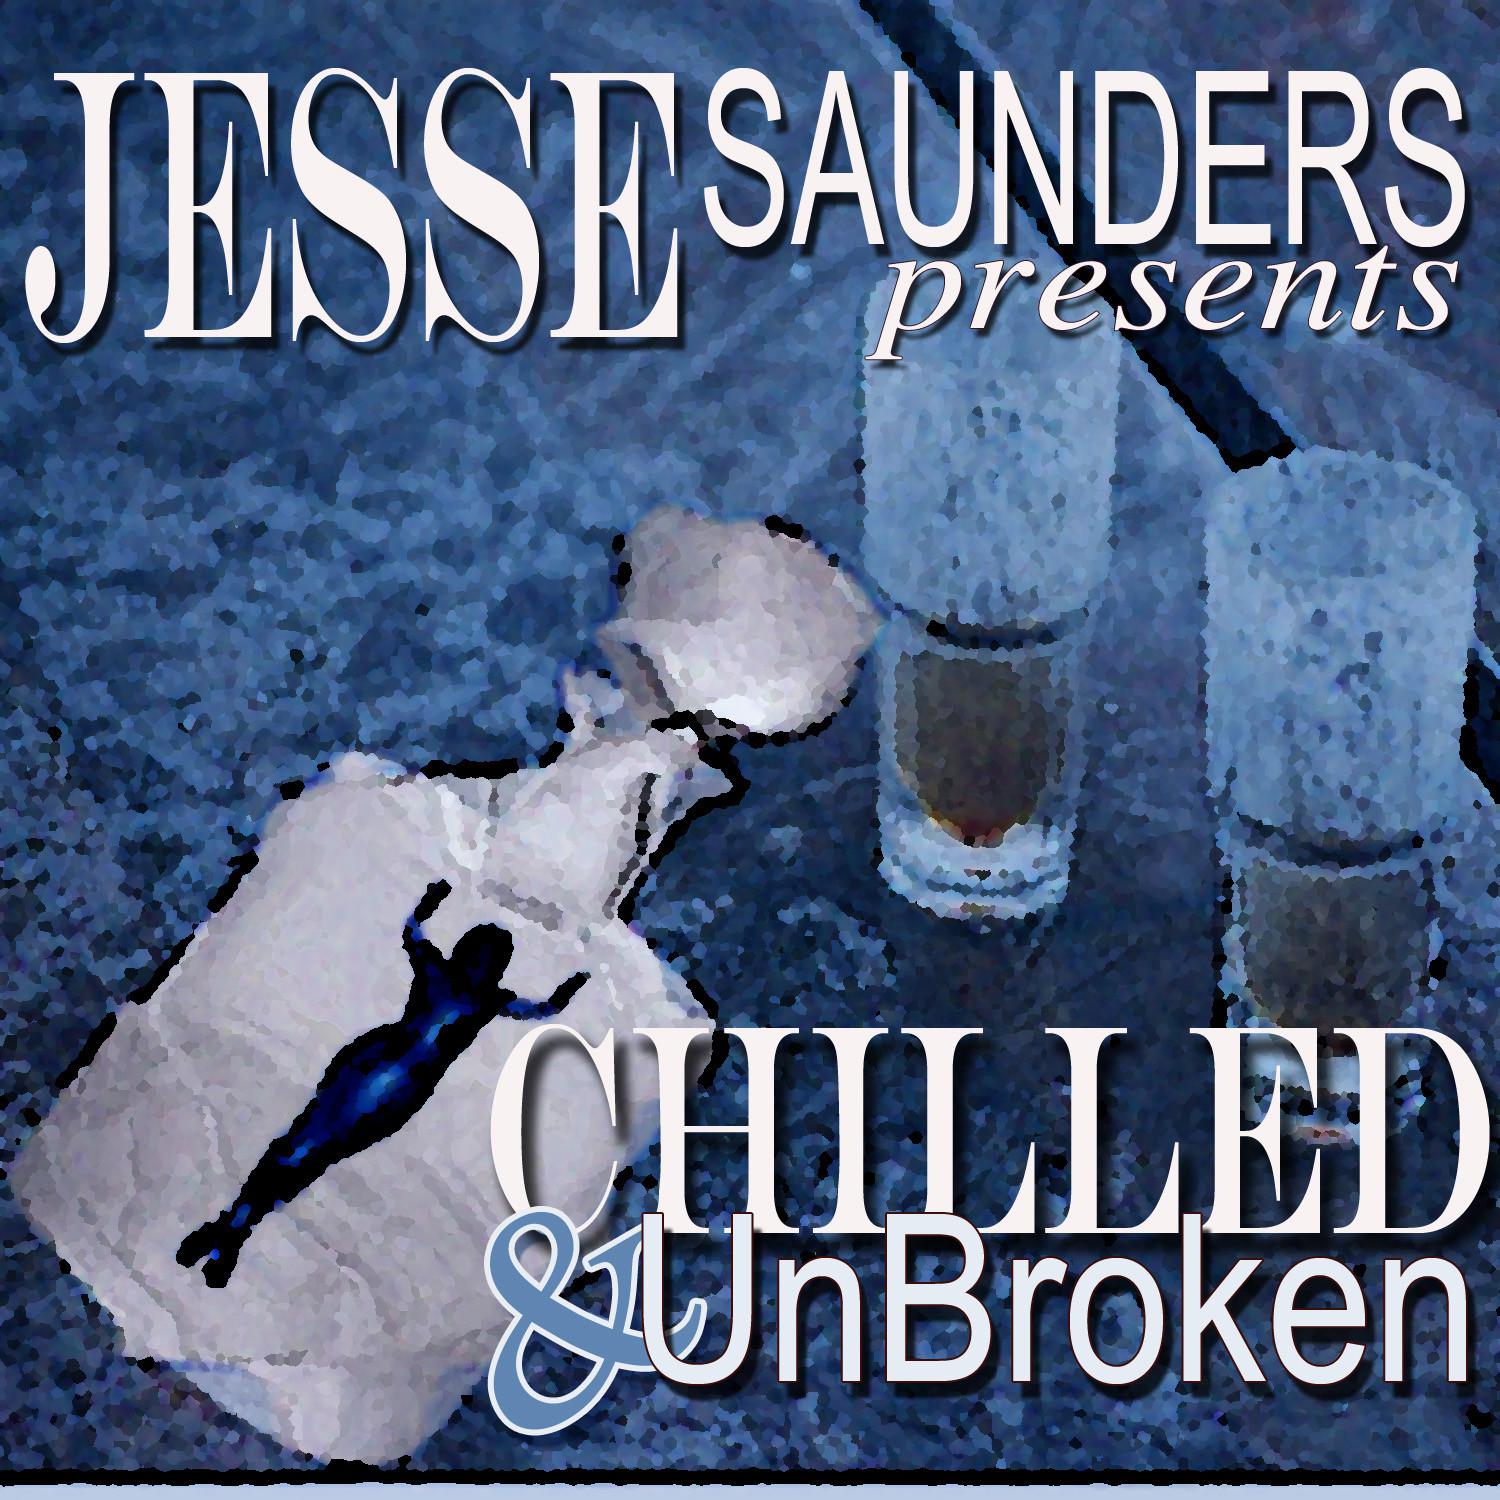 Jesse Saunders presents CHILLED & UnBroken